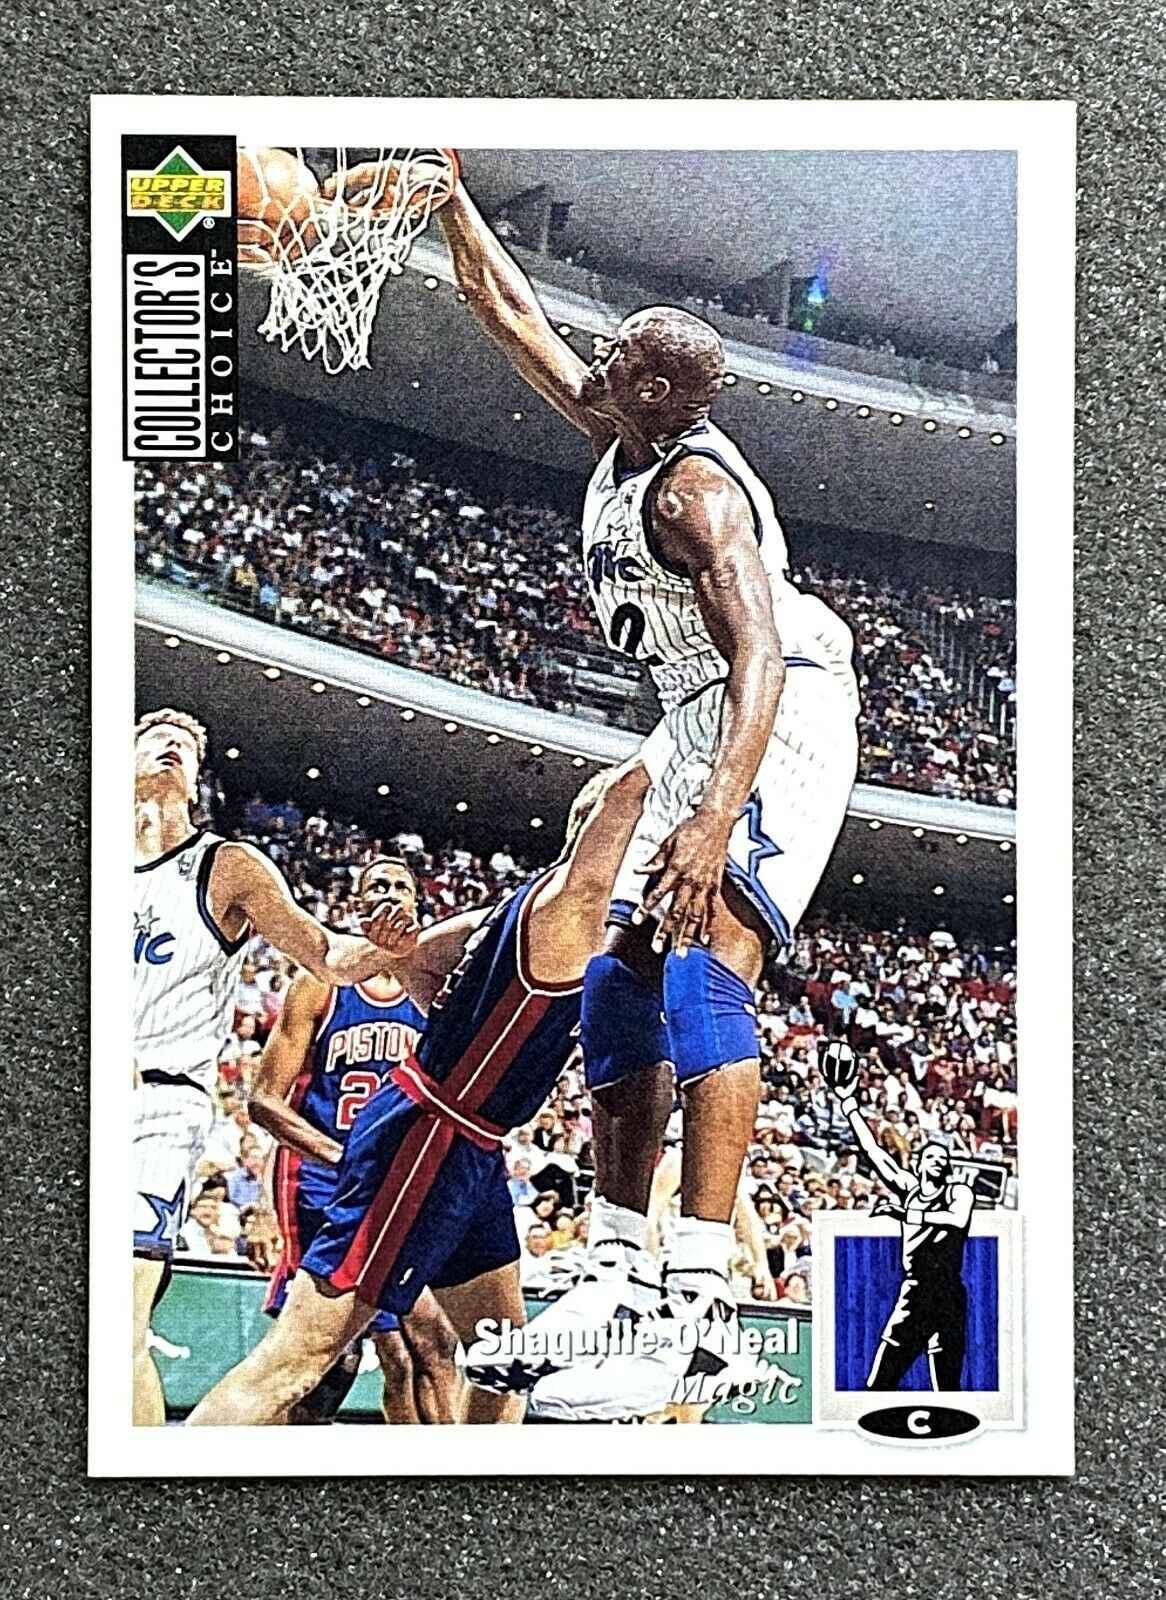 Starting Lineup 1995 NBA Shaquille O'Neal - Orlando Magic w/ collector card